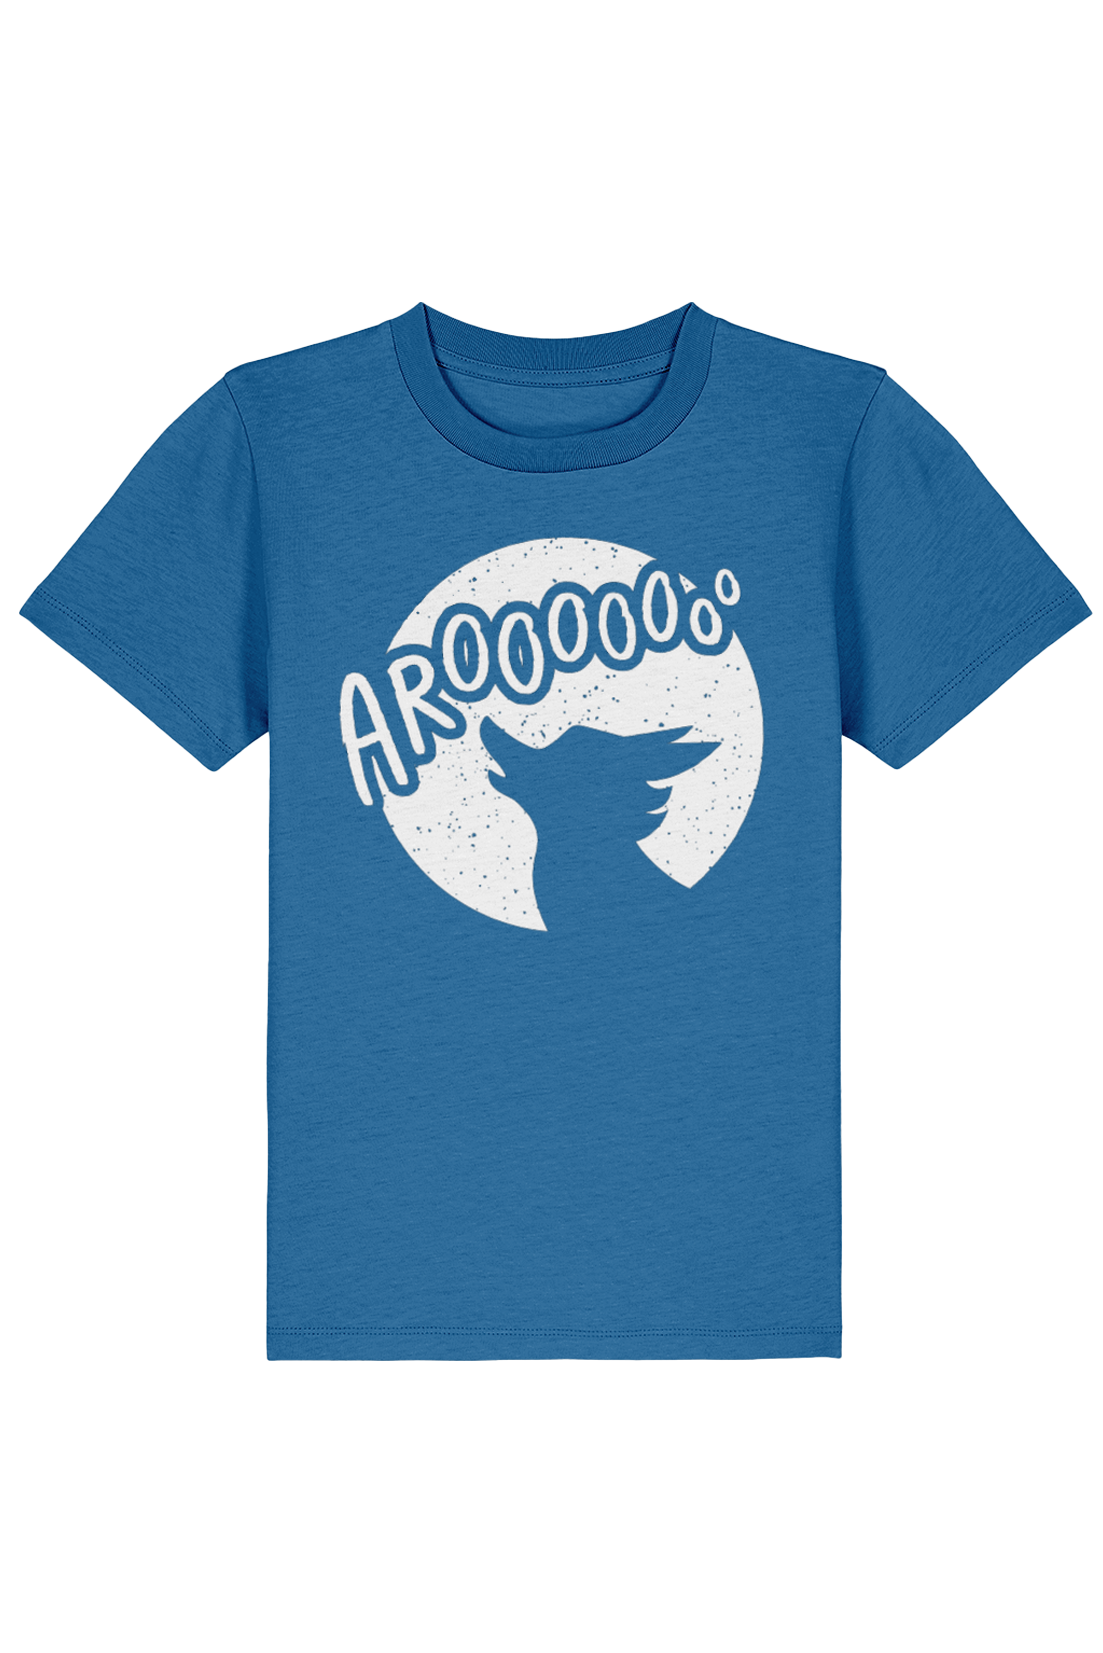 The Pack Aroo kids t-shirt